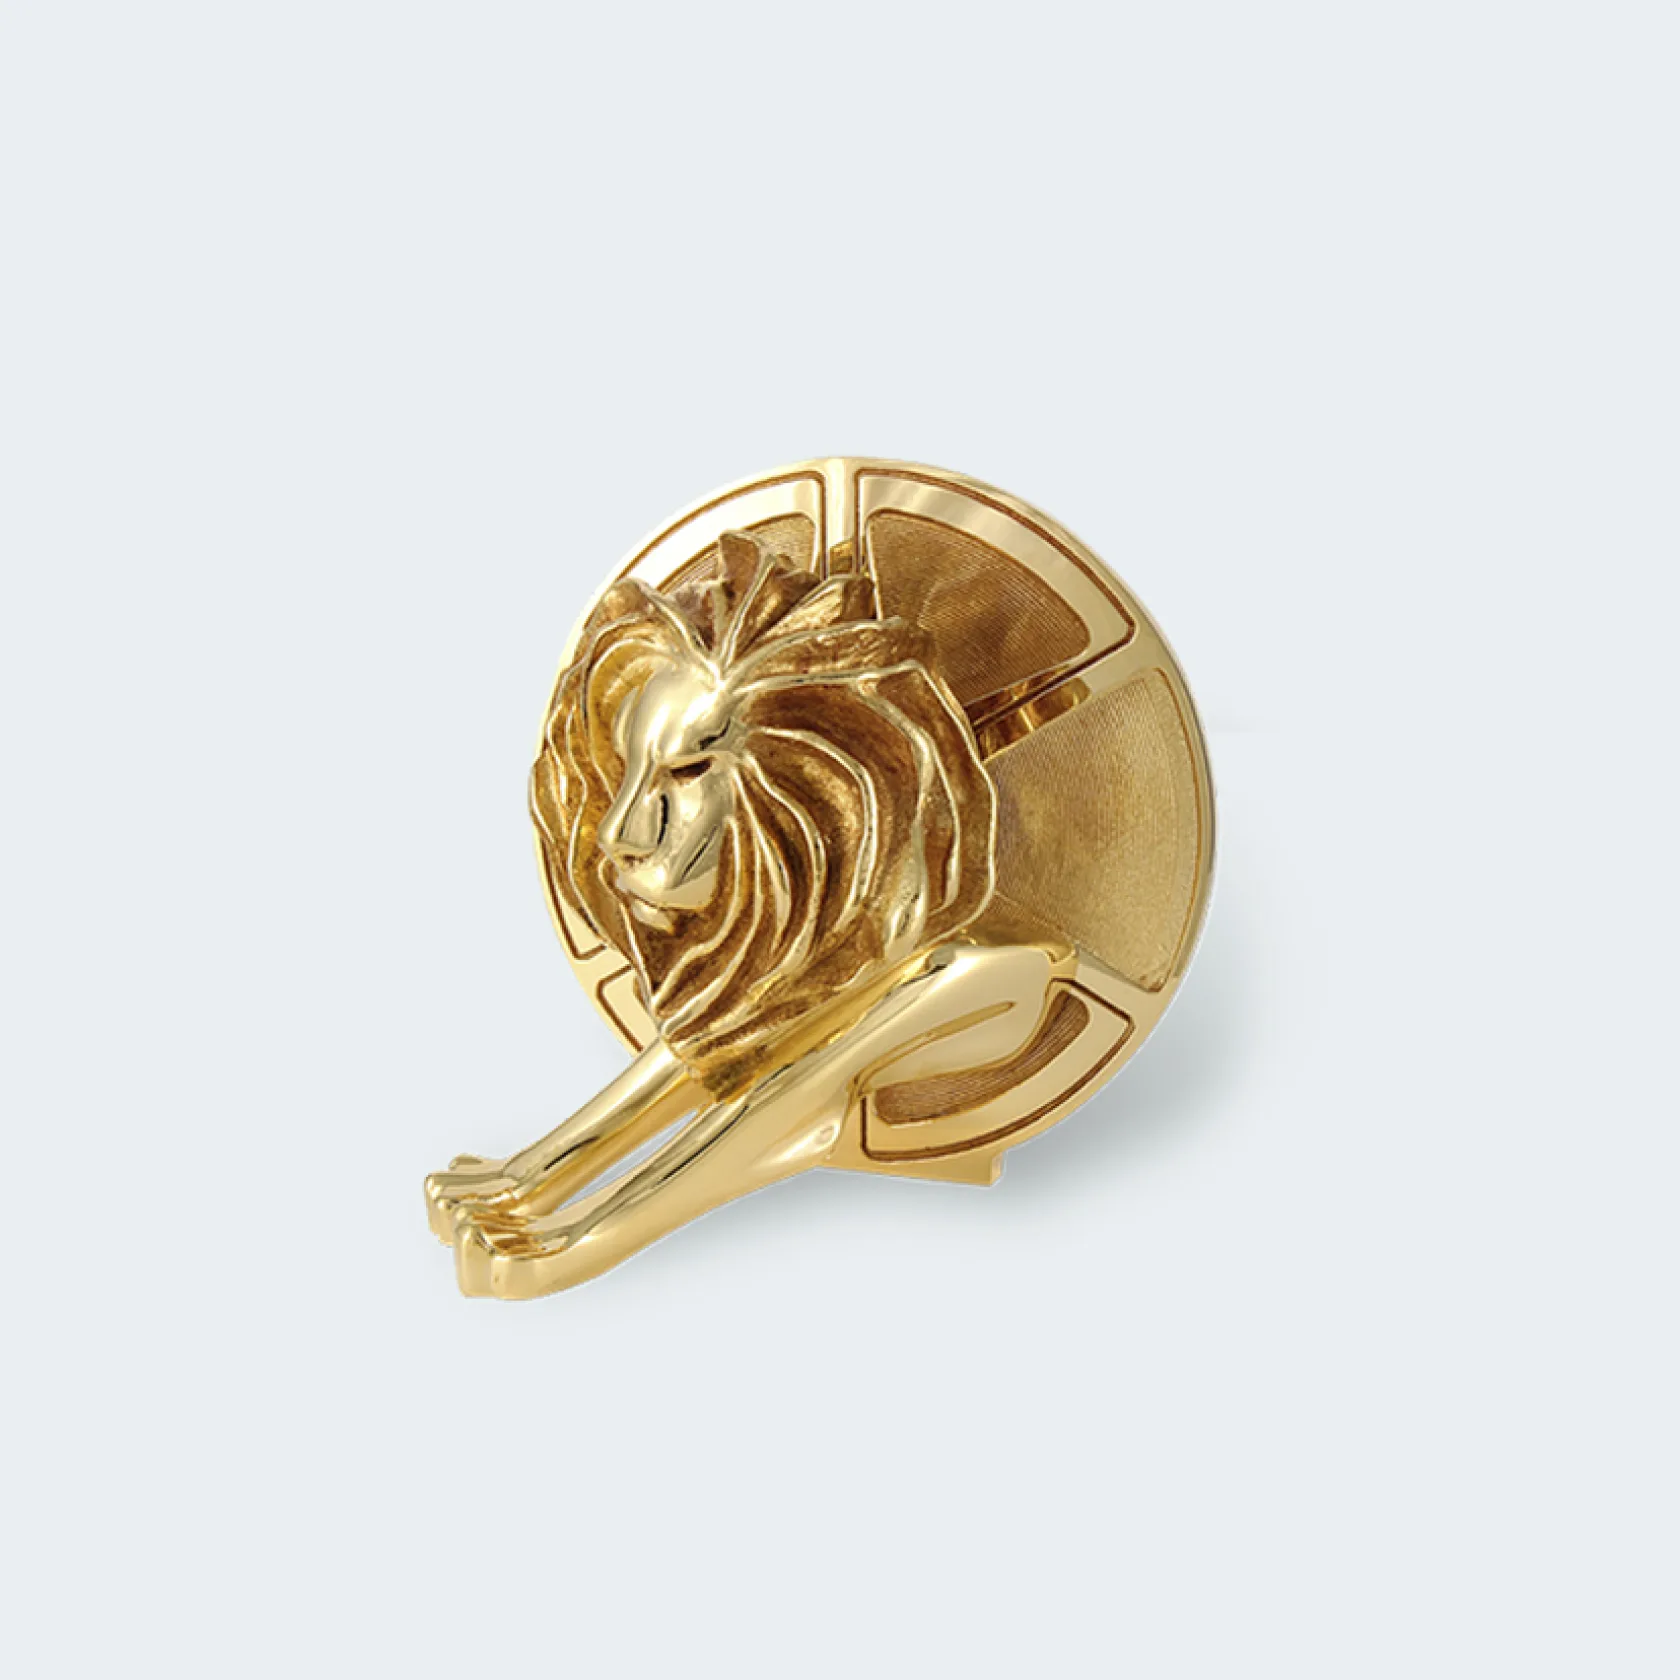 Awards Cannes Lion